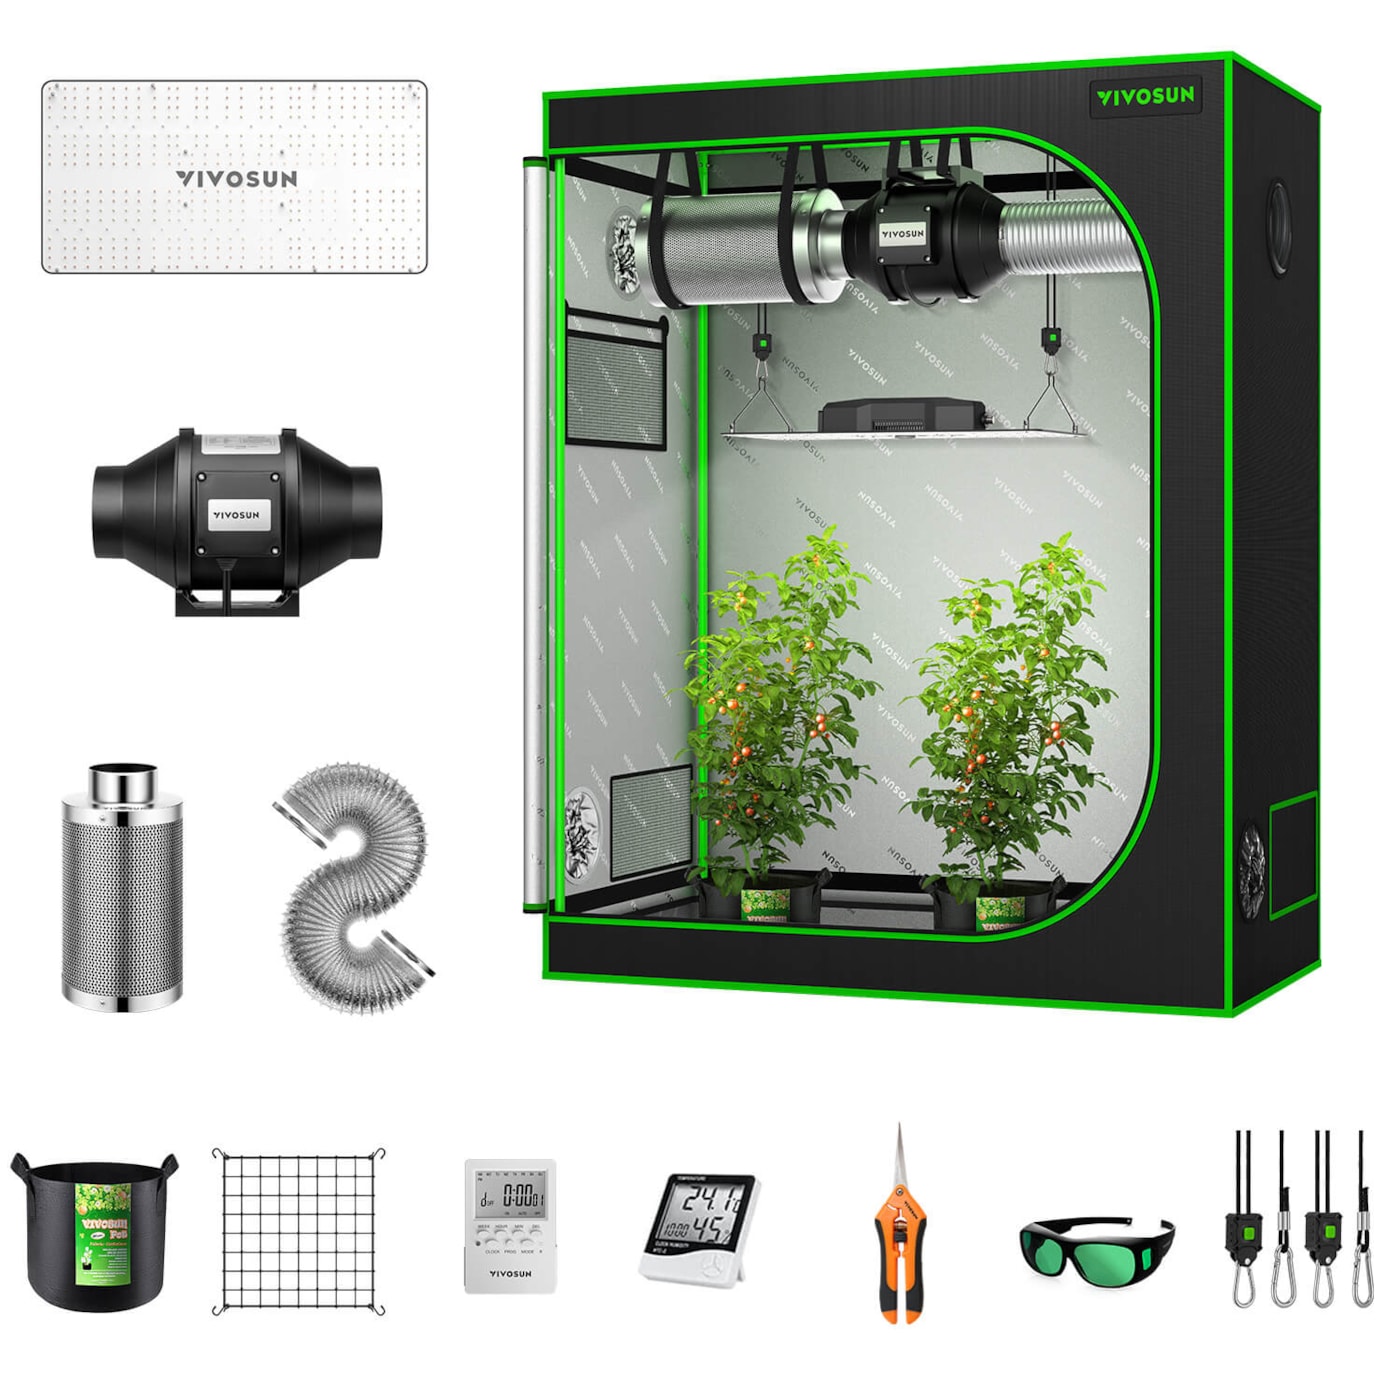 VIVOSUN GIY 4 x 2 ft. Complete Grow Kit with VS2000 LED Grow Light, 48" x 24" x 60"